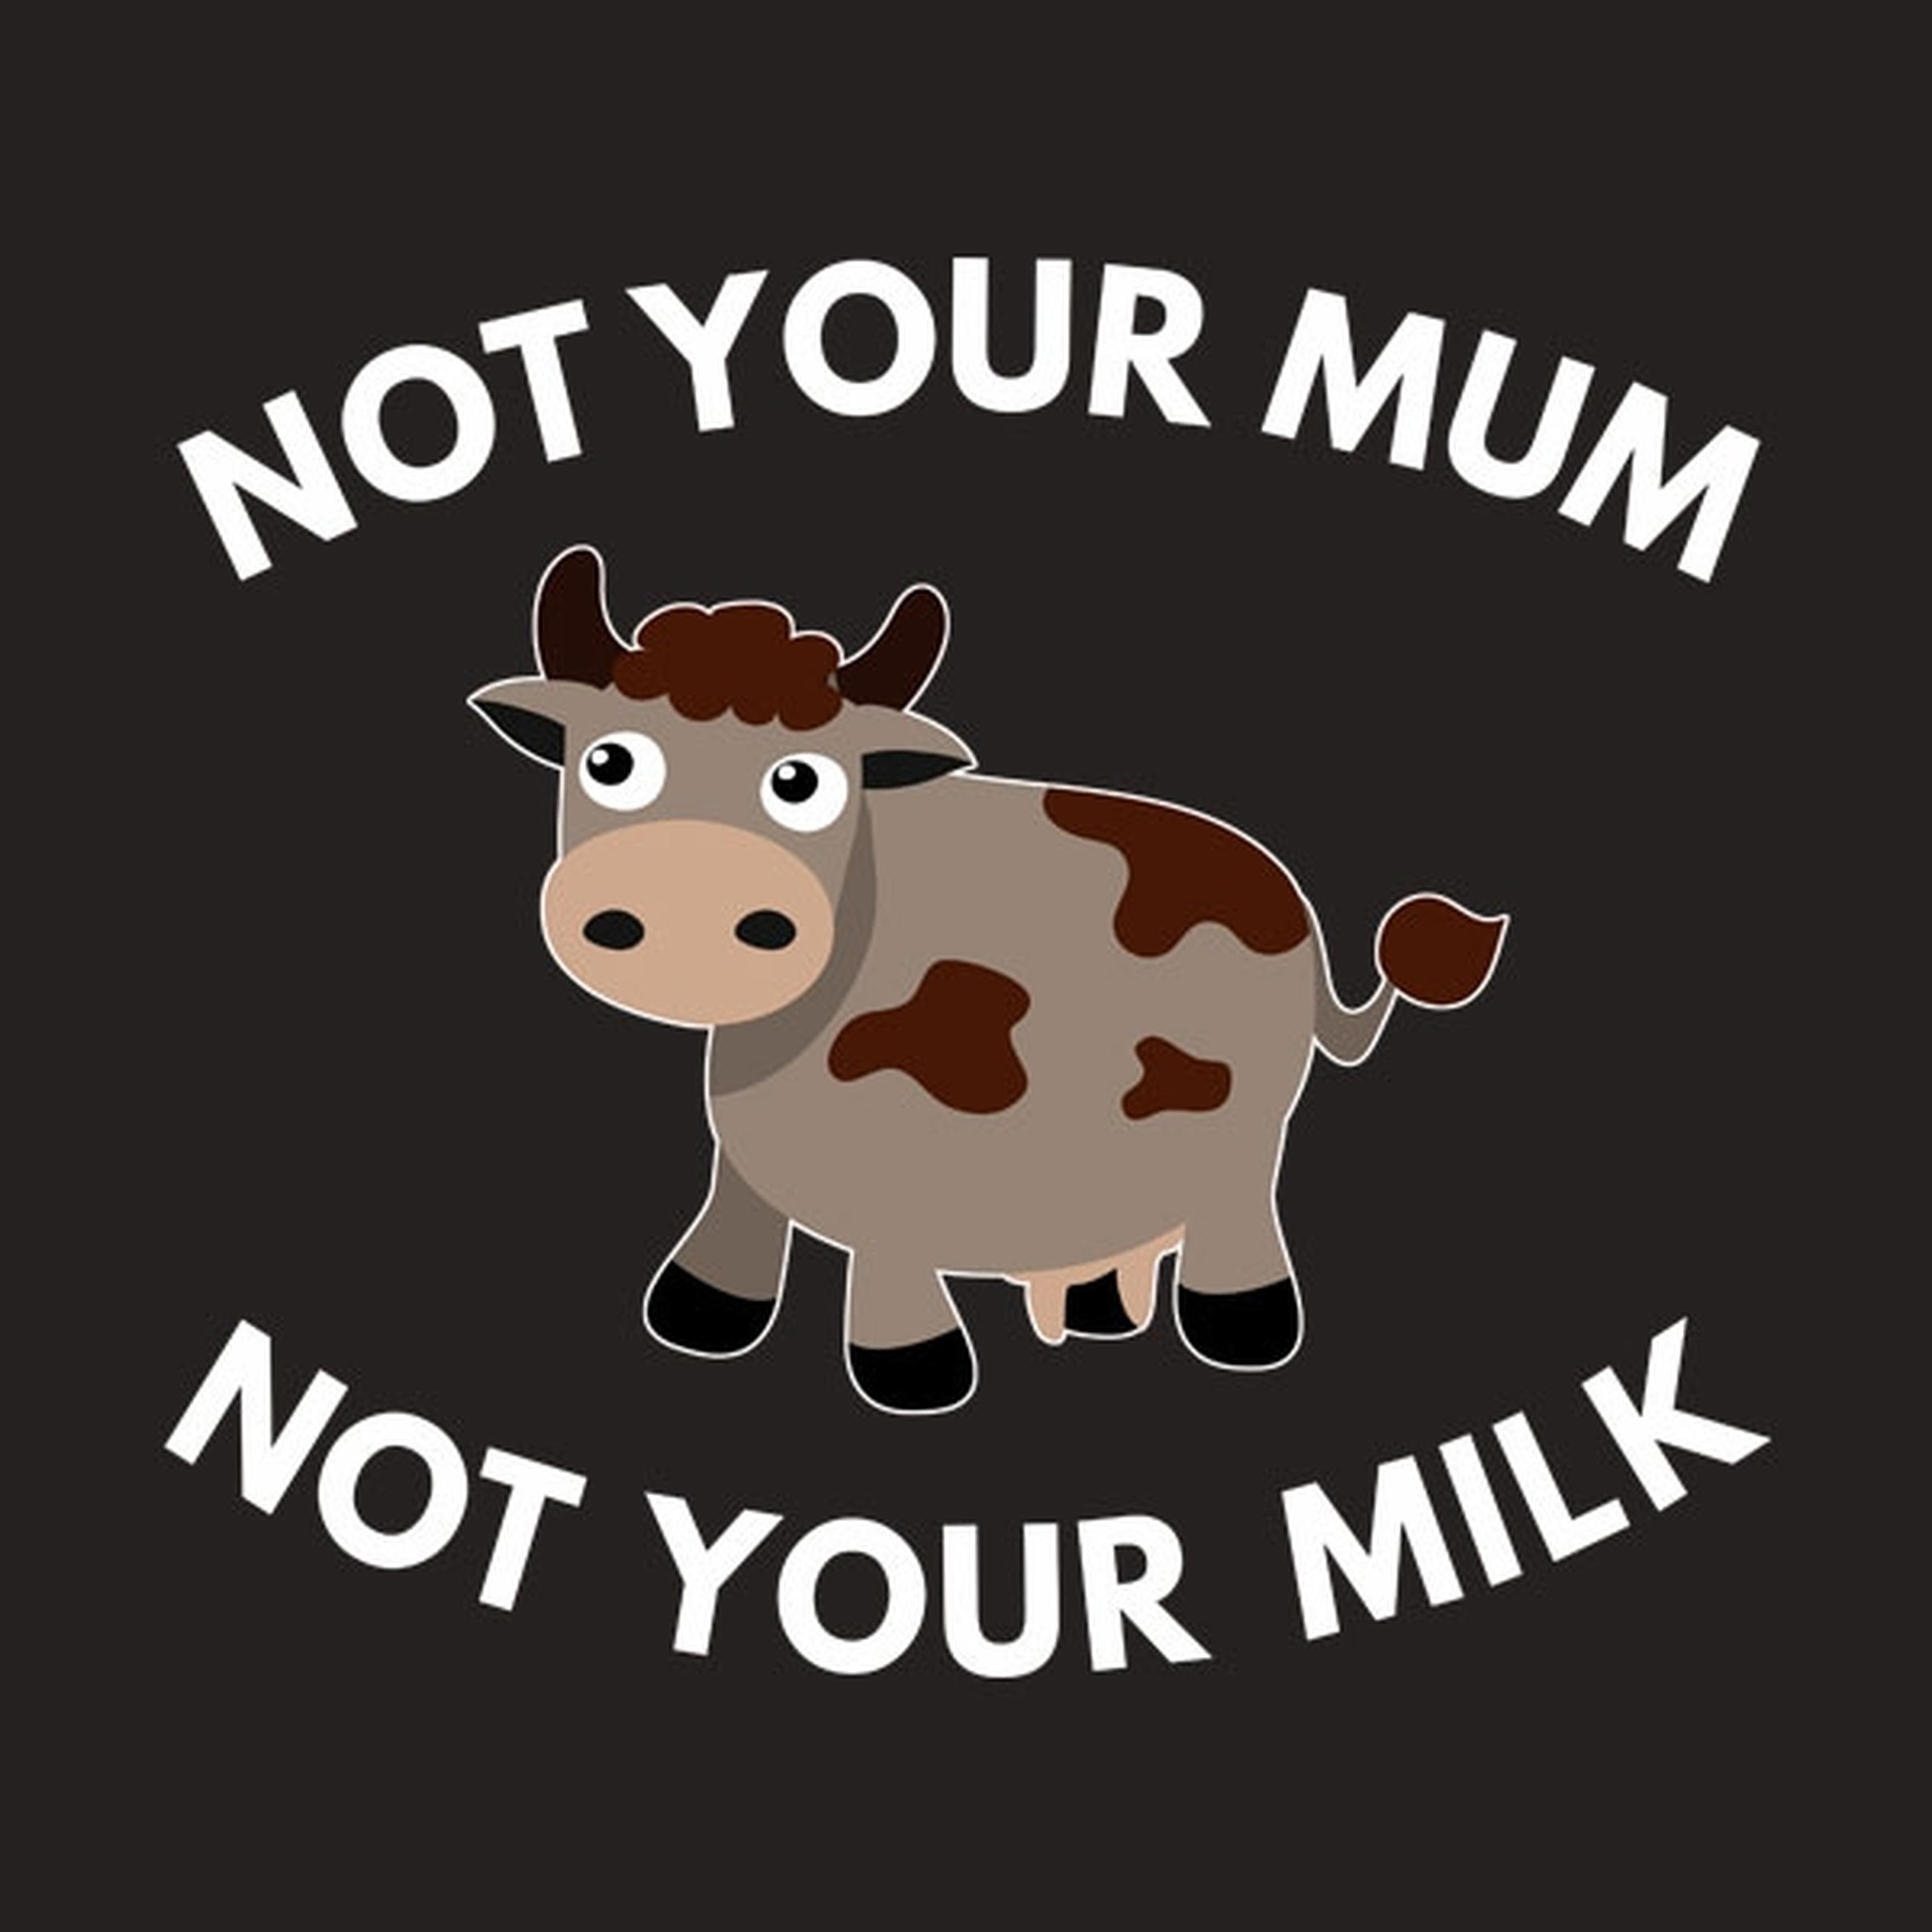 Not your mum, not your milk - T-shirt